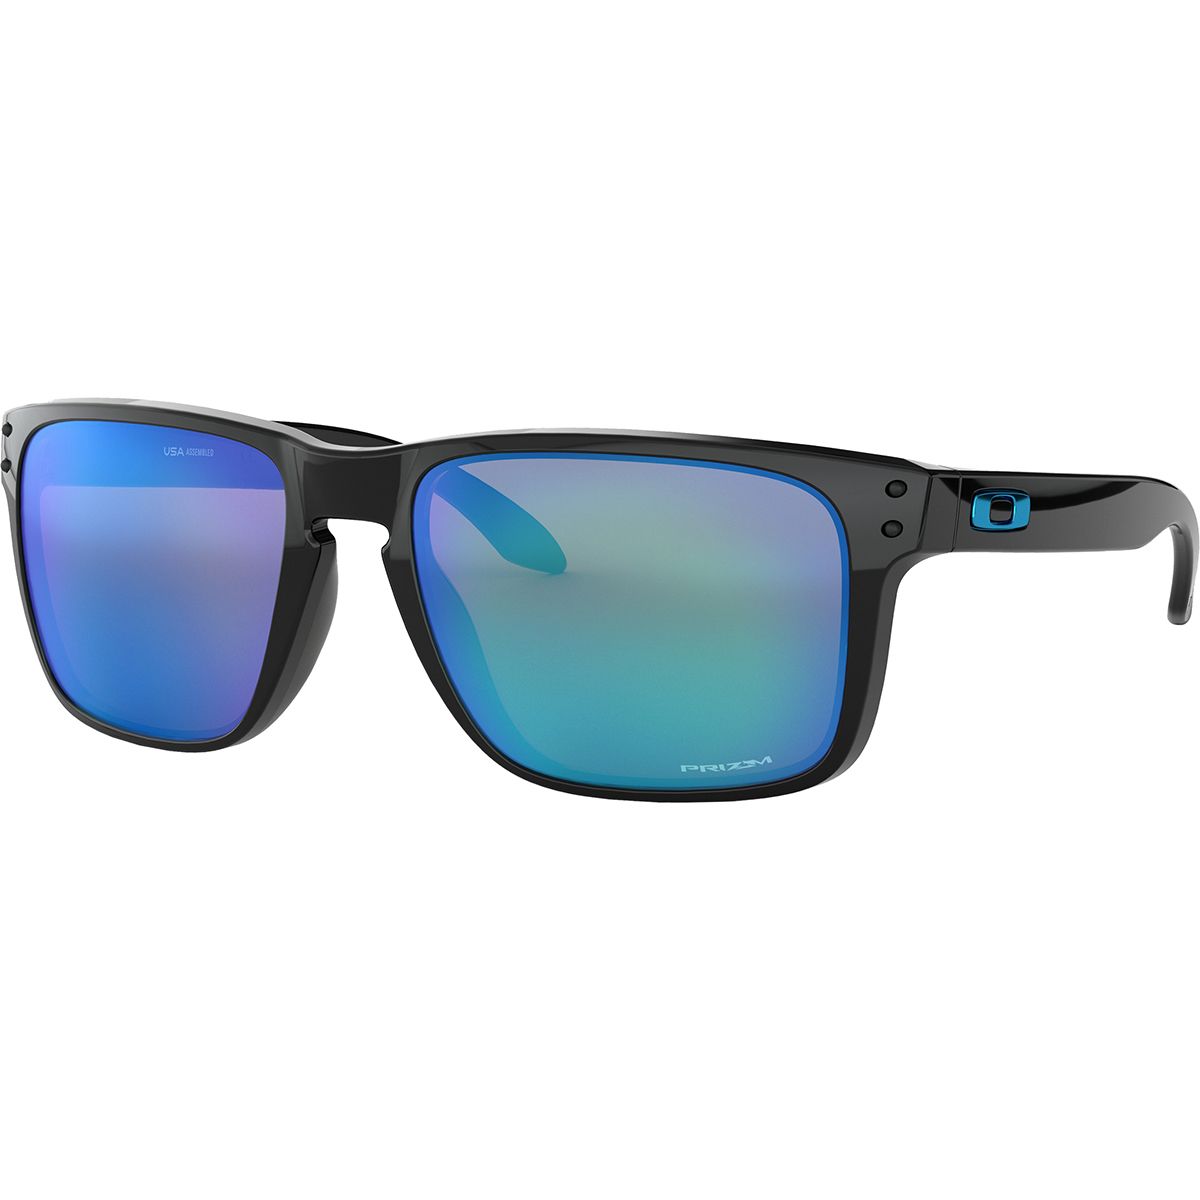 Oakley Holbrook XL Prizm Sunglasses - Men's